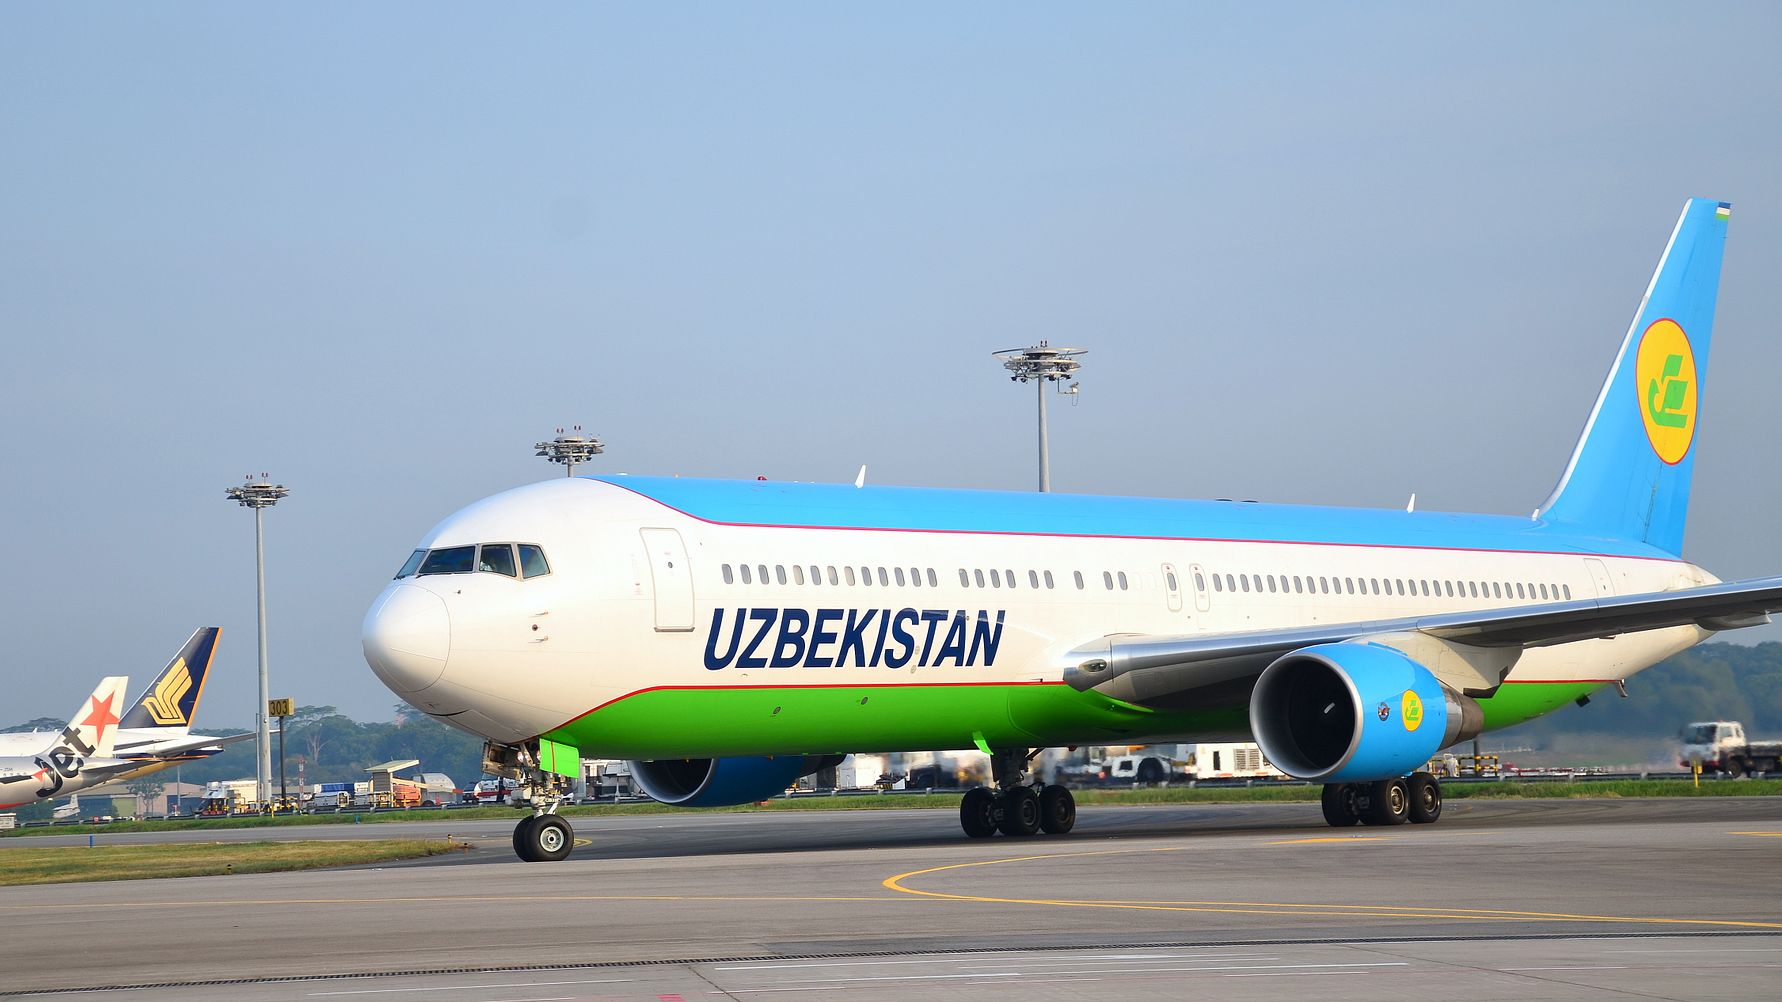 Сайт узбекистанских авиалиний. Аэропорт Uzbekistan Airways аэропорт. Узбекистан авиакомпания хаво йуллари. Самолёт авиакомпании Uzbekistan Airways. Самолеты хаво йуллари.